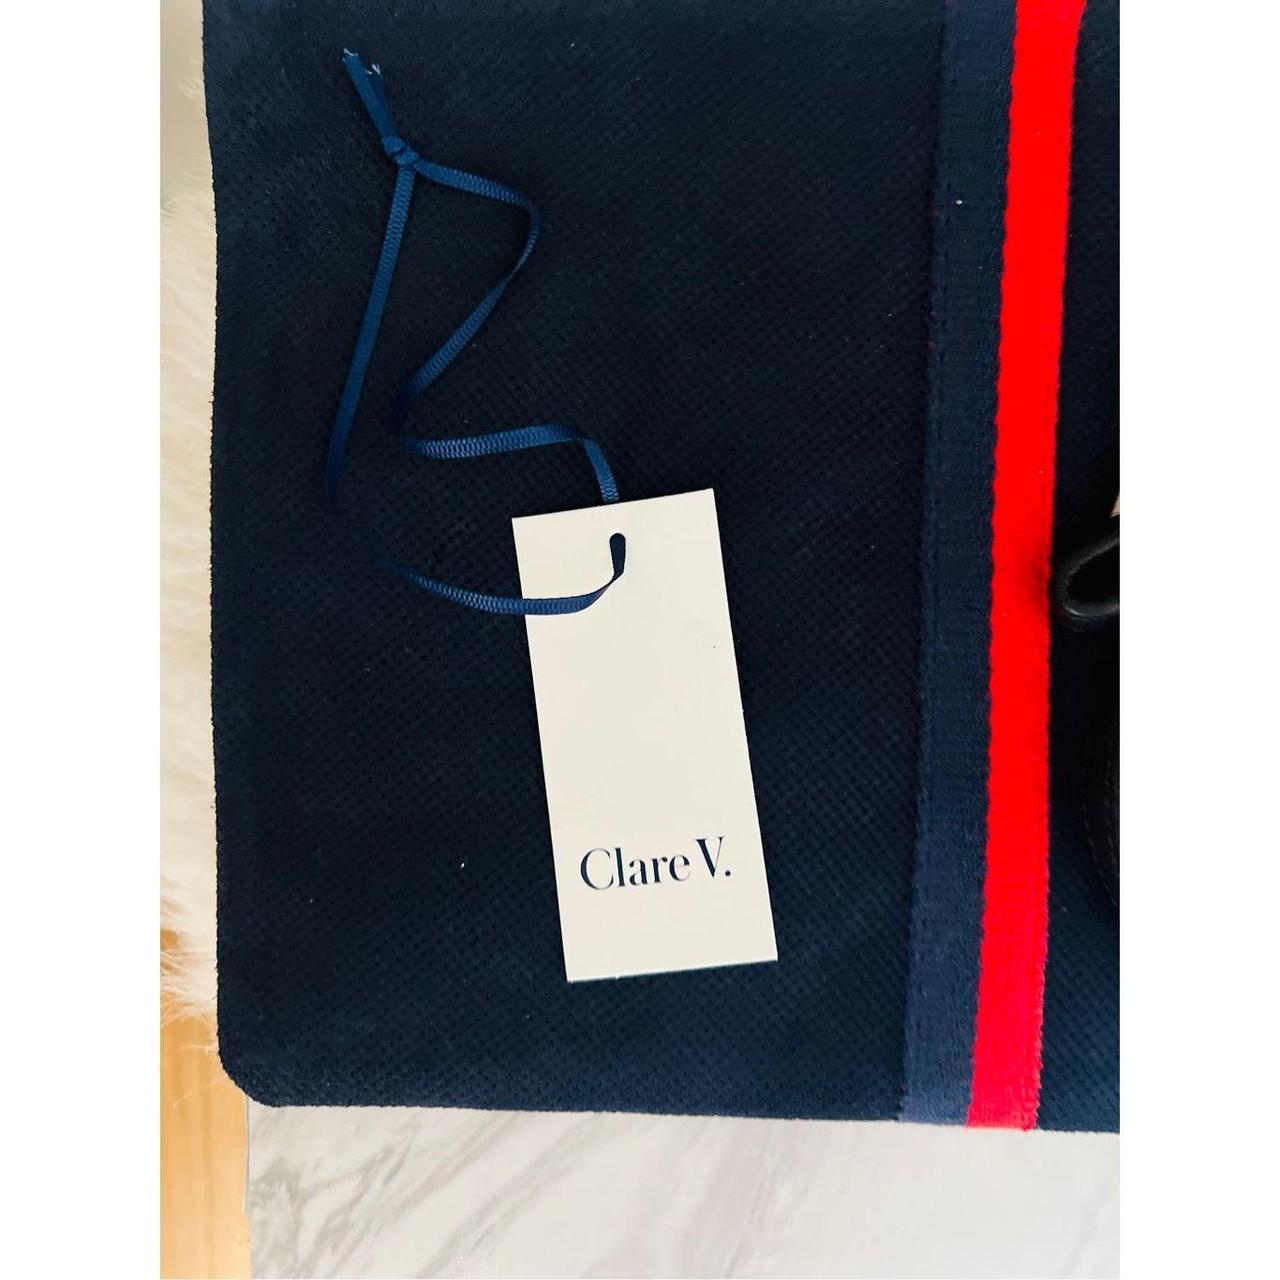 Clare V. Purse Strap in Black and White #clarev - Depop